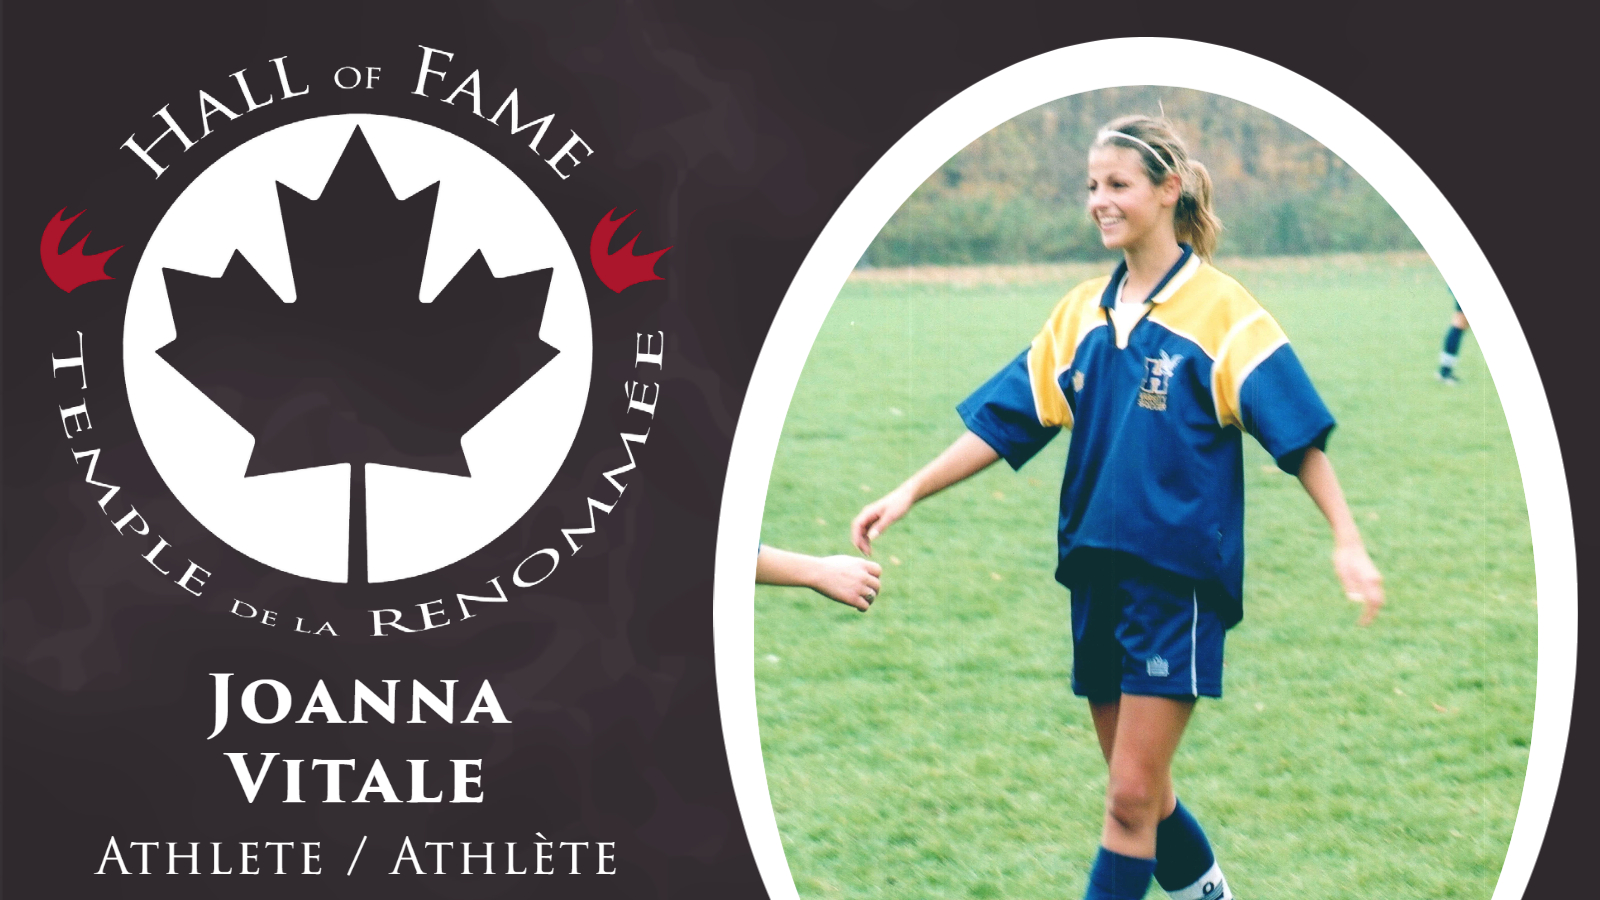 Joanna Vitale with the CCAA Hall of Fame logo